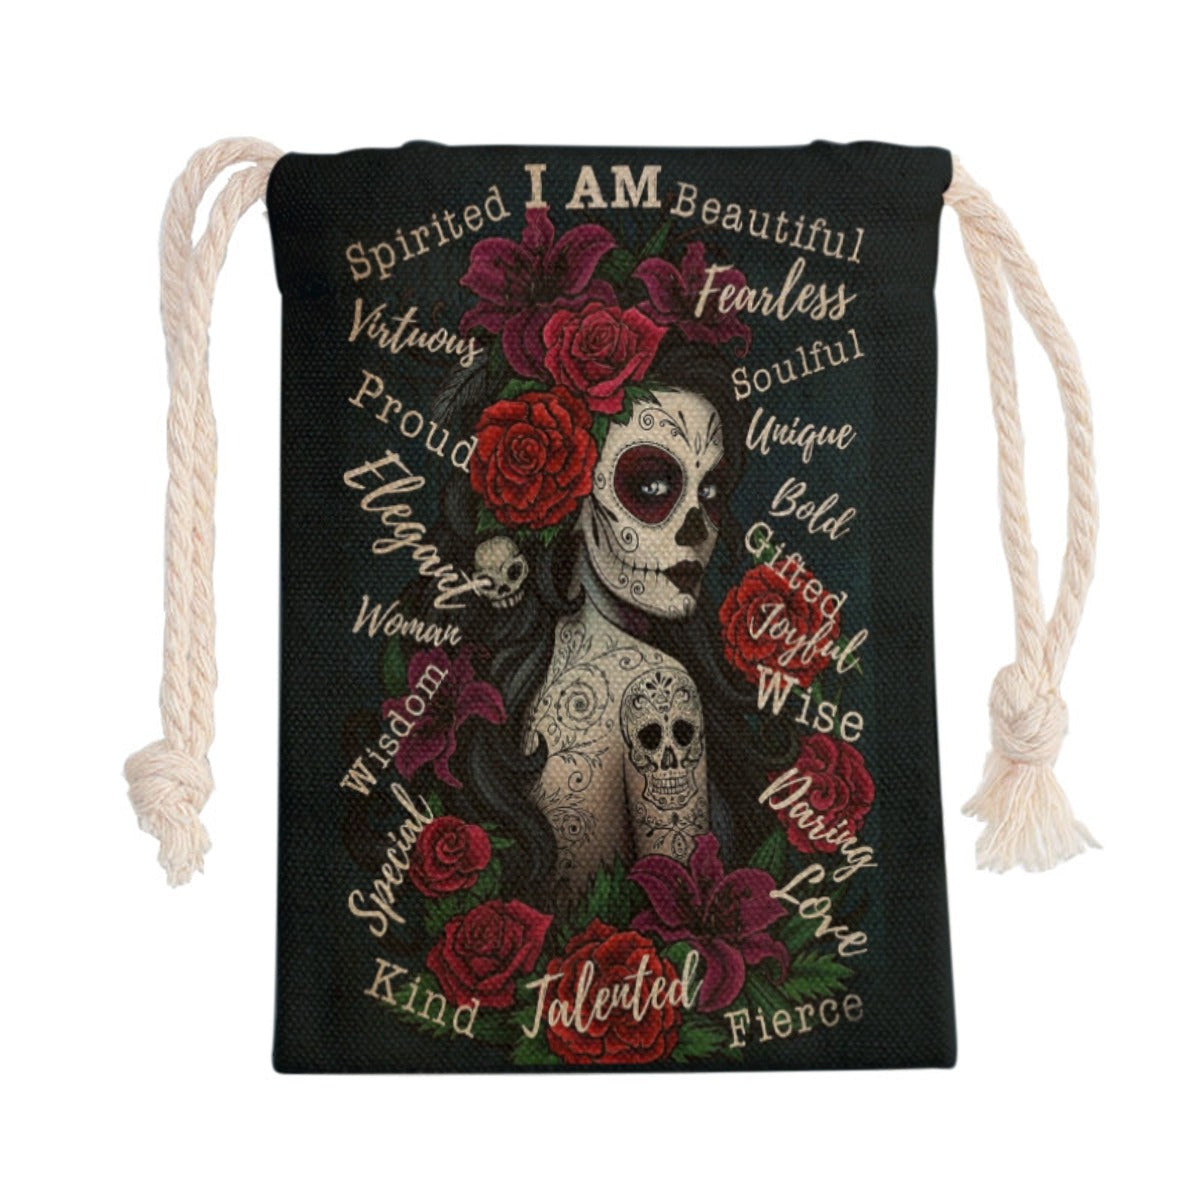 Sugar skull girl Drawstring Bag, Day of the dead skull Drawstring bag, gothic shoulder bag